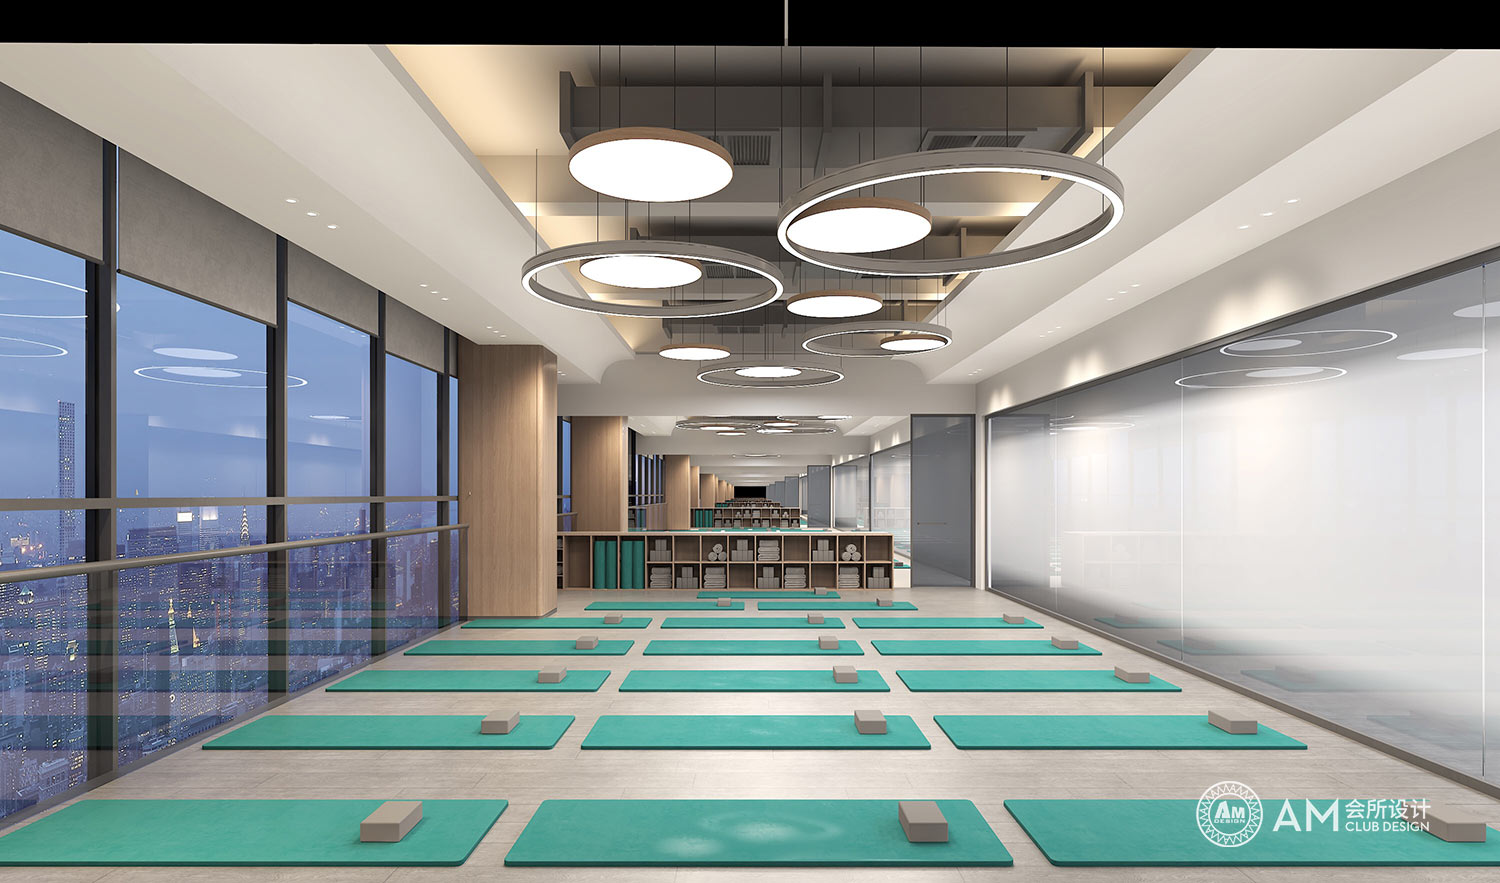 AM DESIGN | Design of Yoga area in Hefei Gymnasium